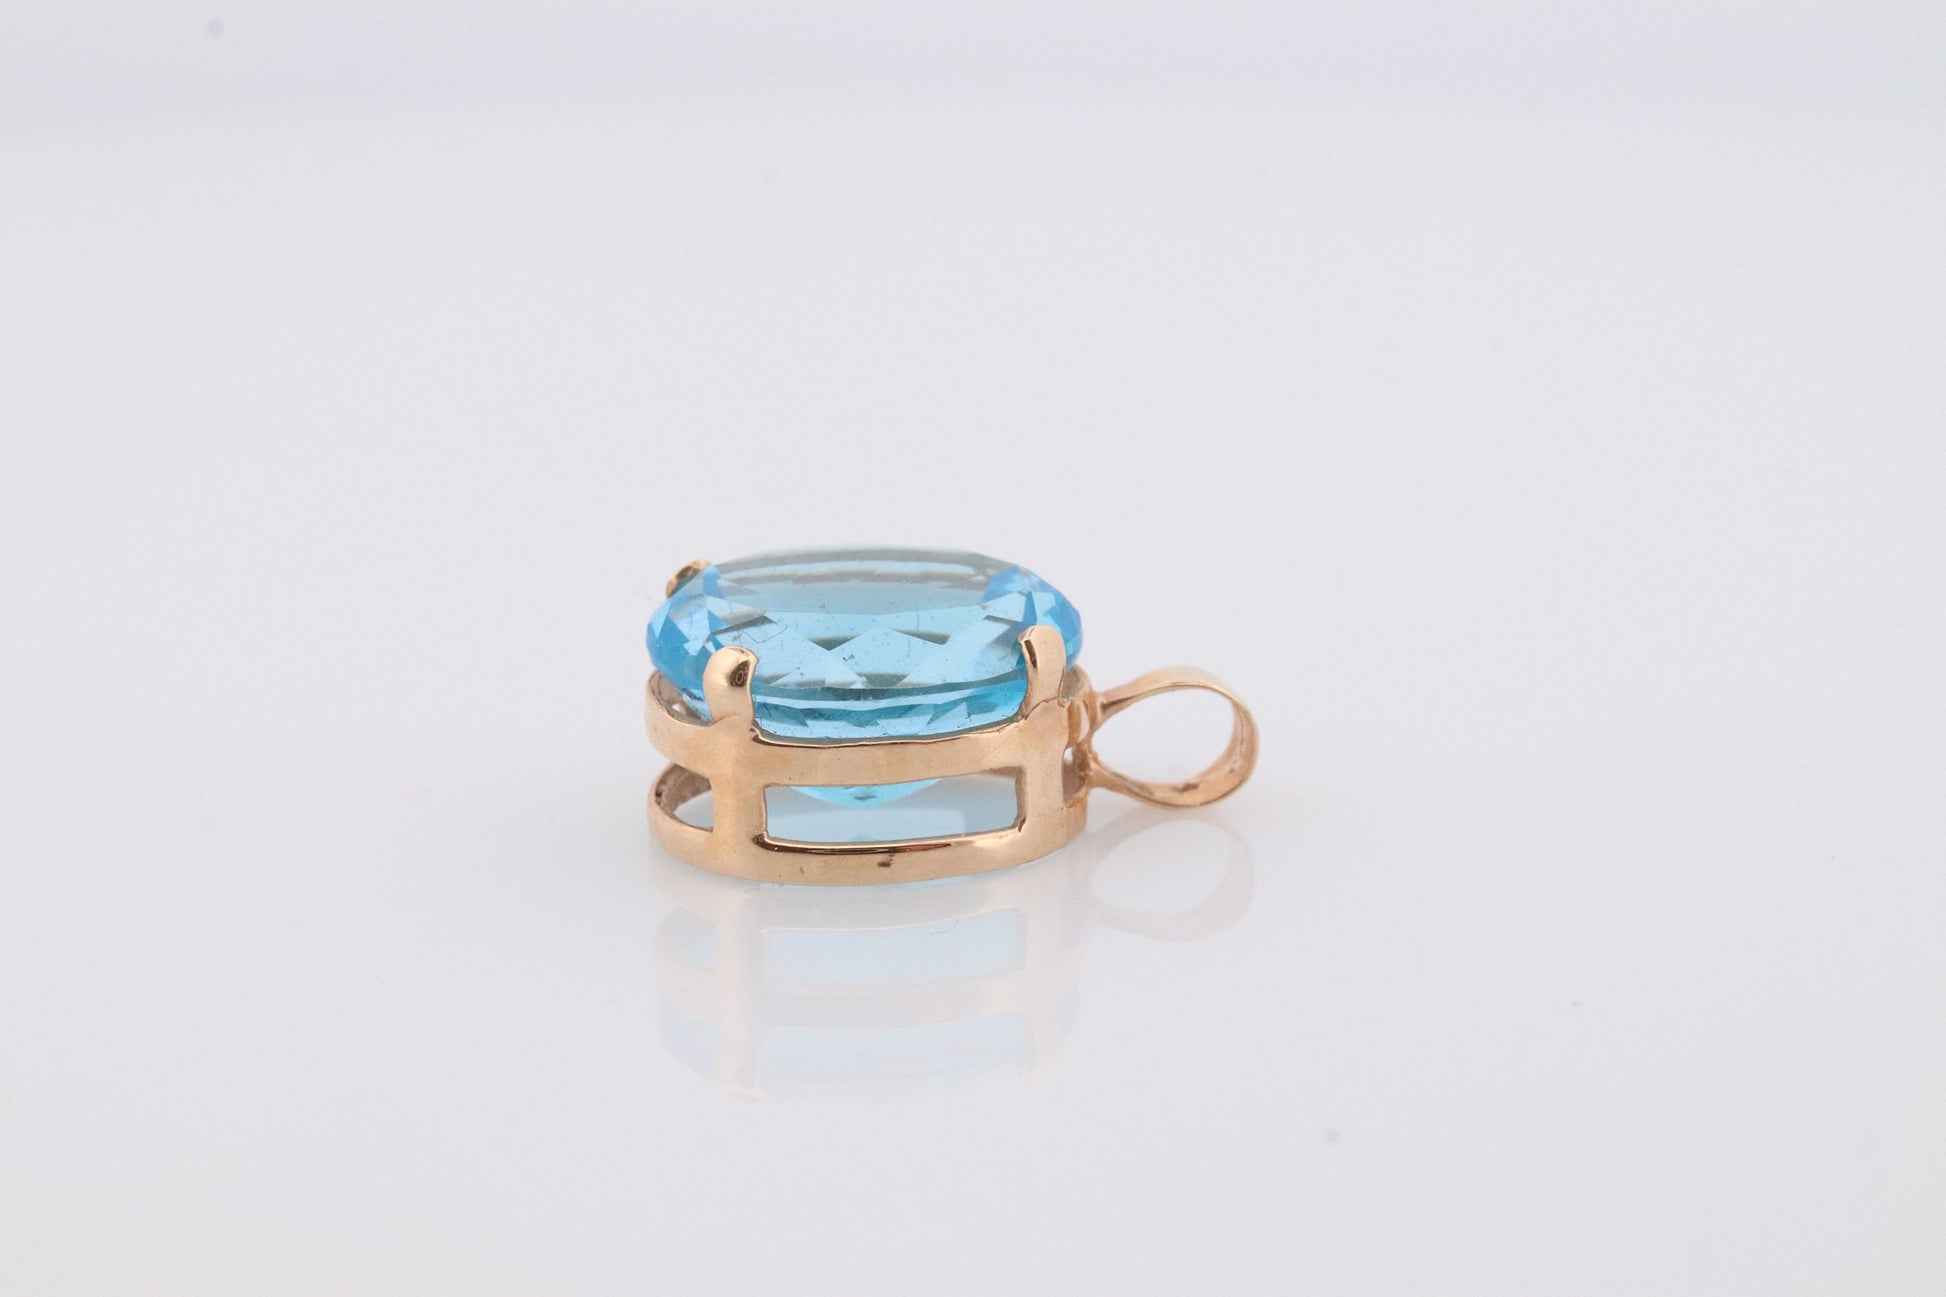 14k Blue TOPAZ Pendant. Large Swiss Blue Topaz High quality solitaire oval pendant piece. st(44)